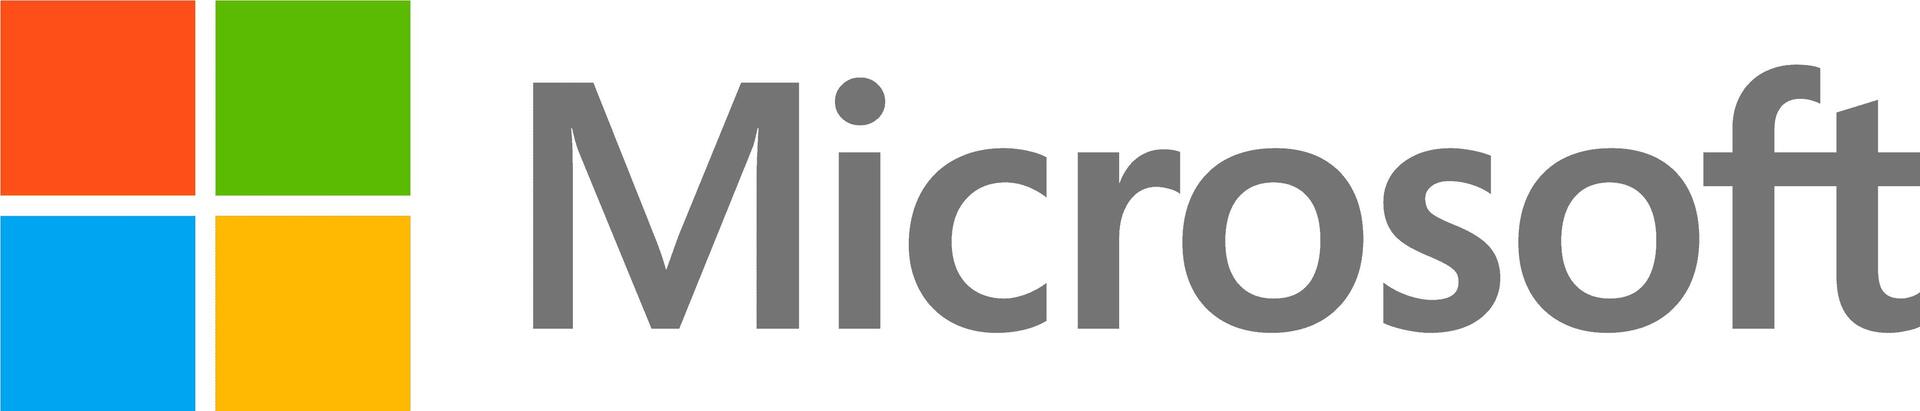 Microsoft DG7GMGF0M80J.0002 Software-Lizenz/-Upgrade 1 Lizenz(en) (DG7GMGF0M80J.0002)